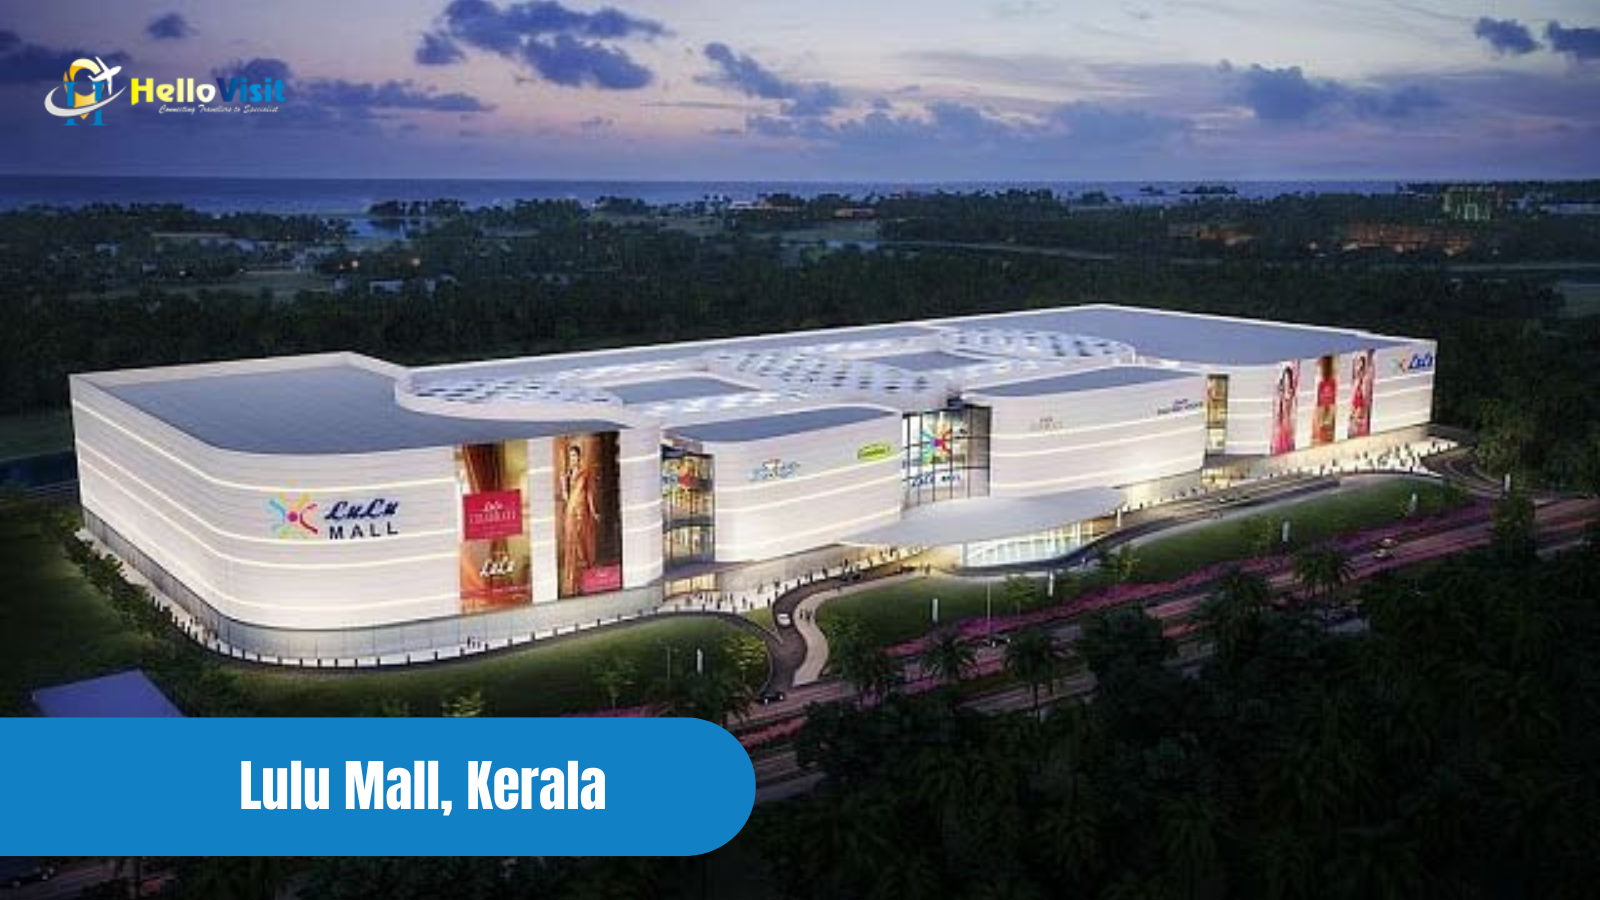 Lulu Mall, Kerala